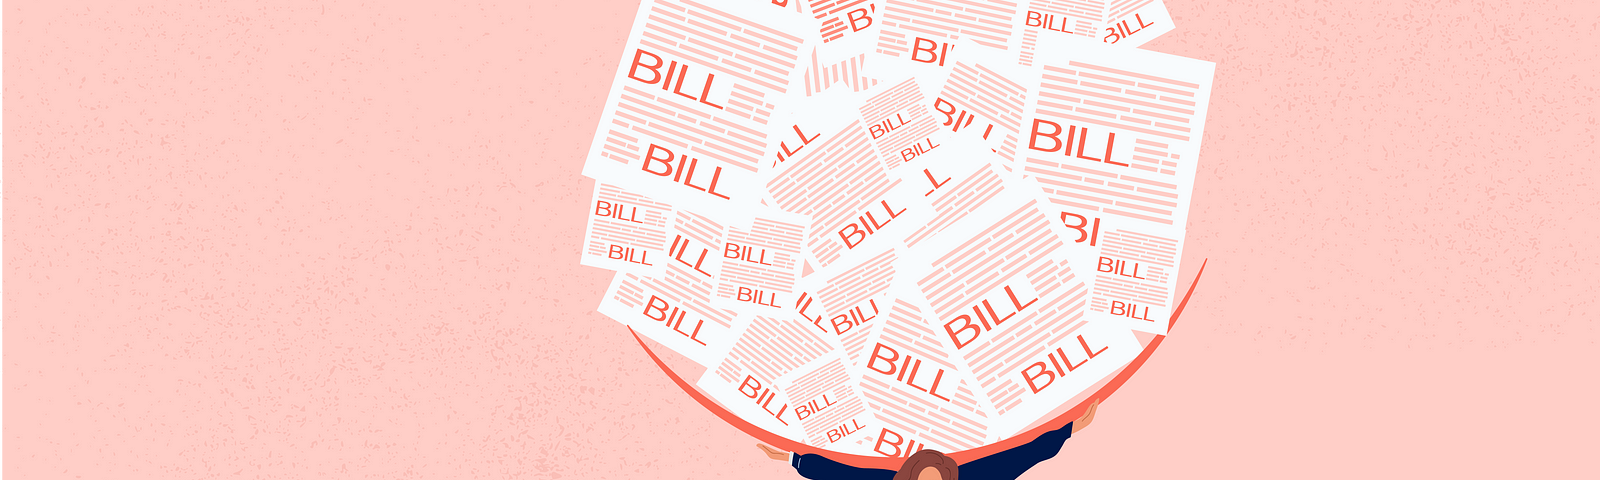 Big Bills hero image: a woman struggling to hold up a world of large healthcare bills, like Atlas in Greek mythology.